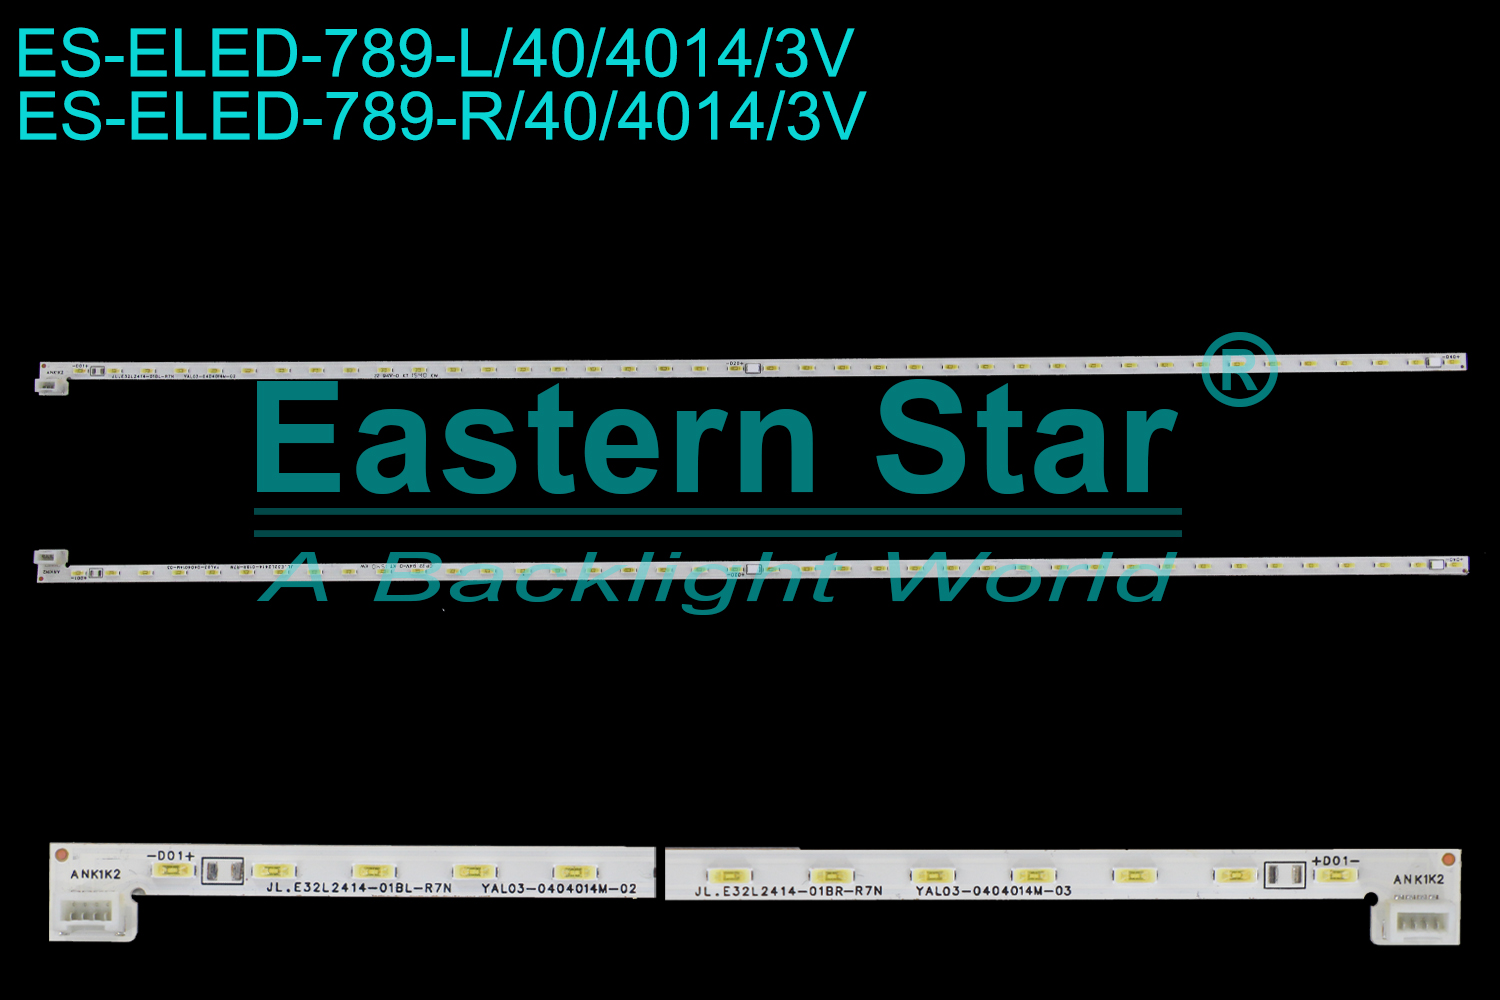 ES-ELED-789 ELED/EDGE TV backlight use for 32'' L:JL.E32L2414-01BL-R7N YAL03-0404014M-02  R:JL.E32L2414-01BR-R7N YAL03-0404014M-03  LED STRIPS(2)